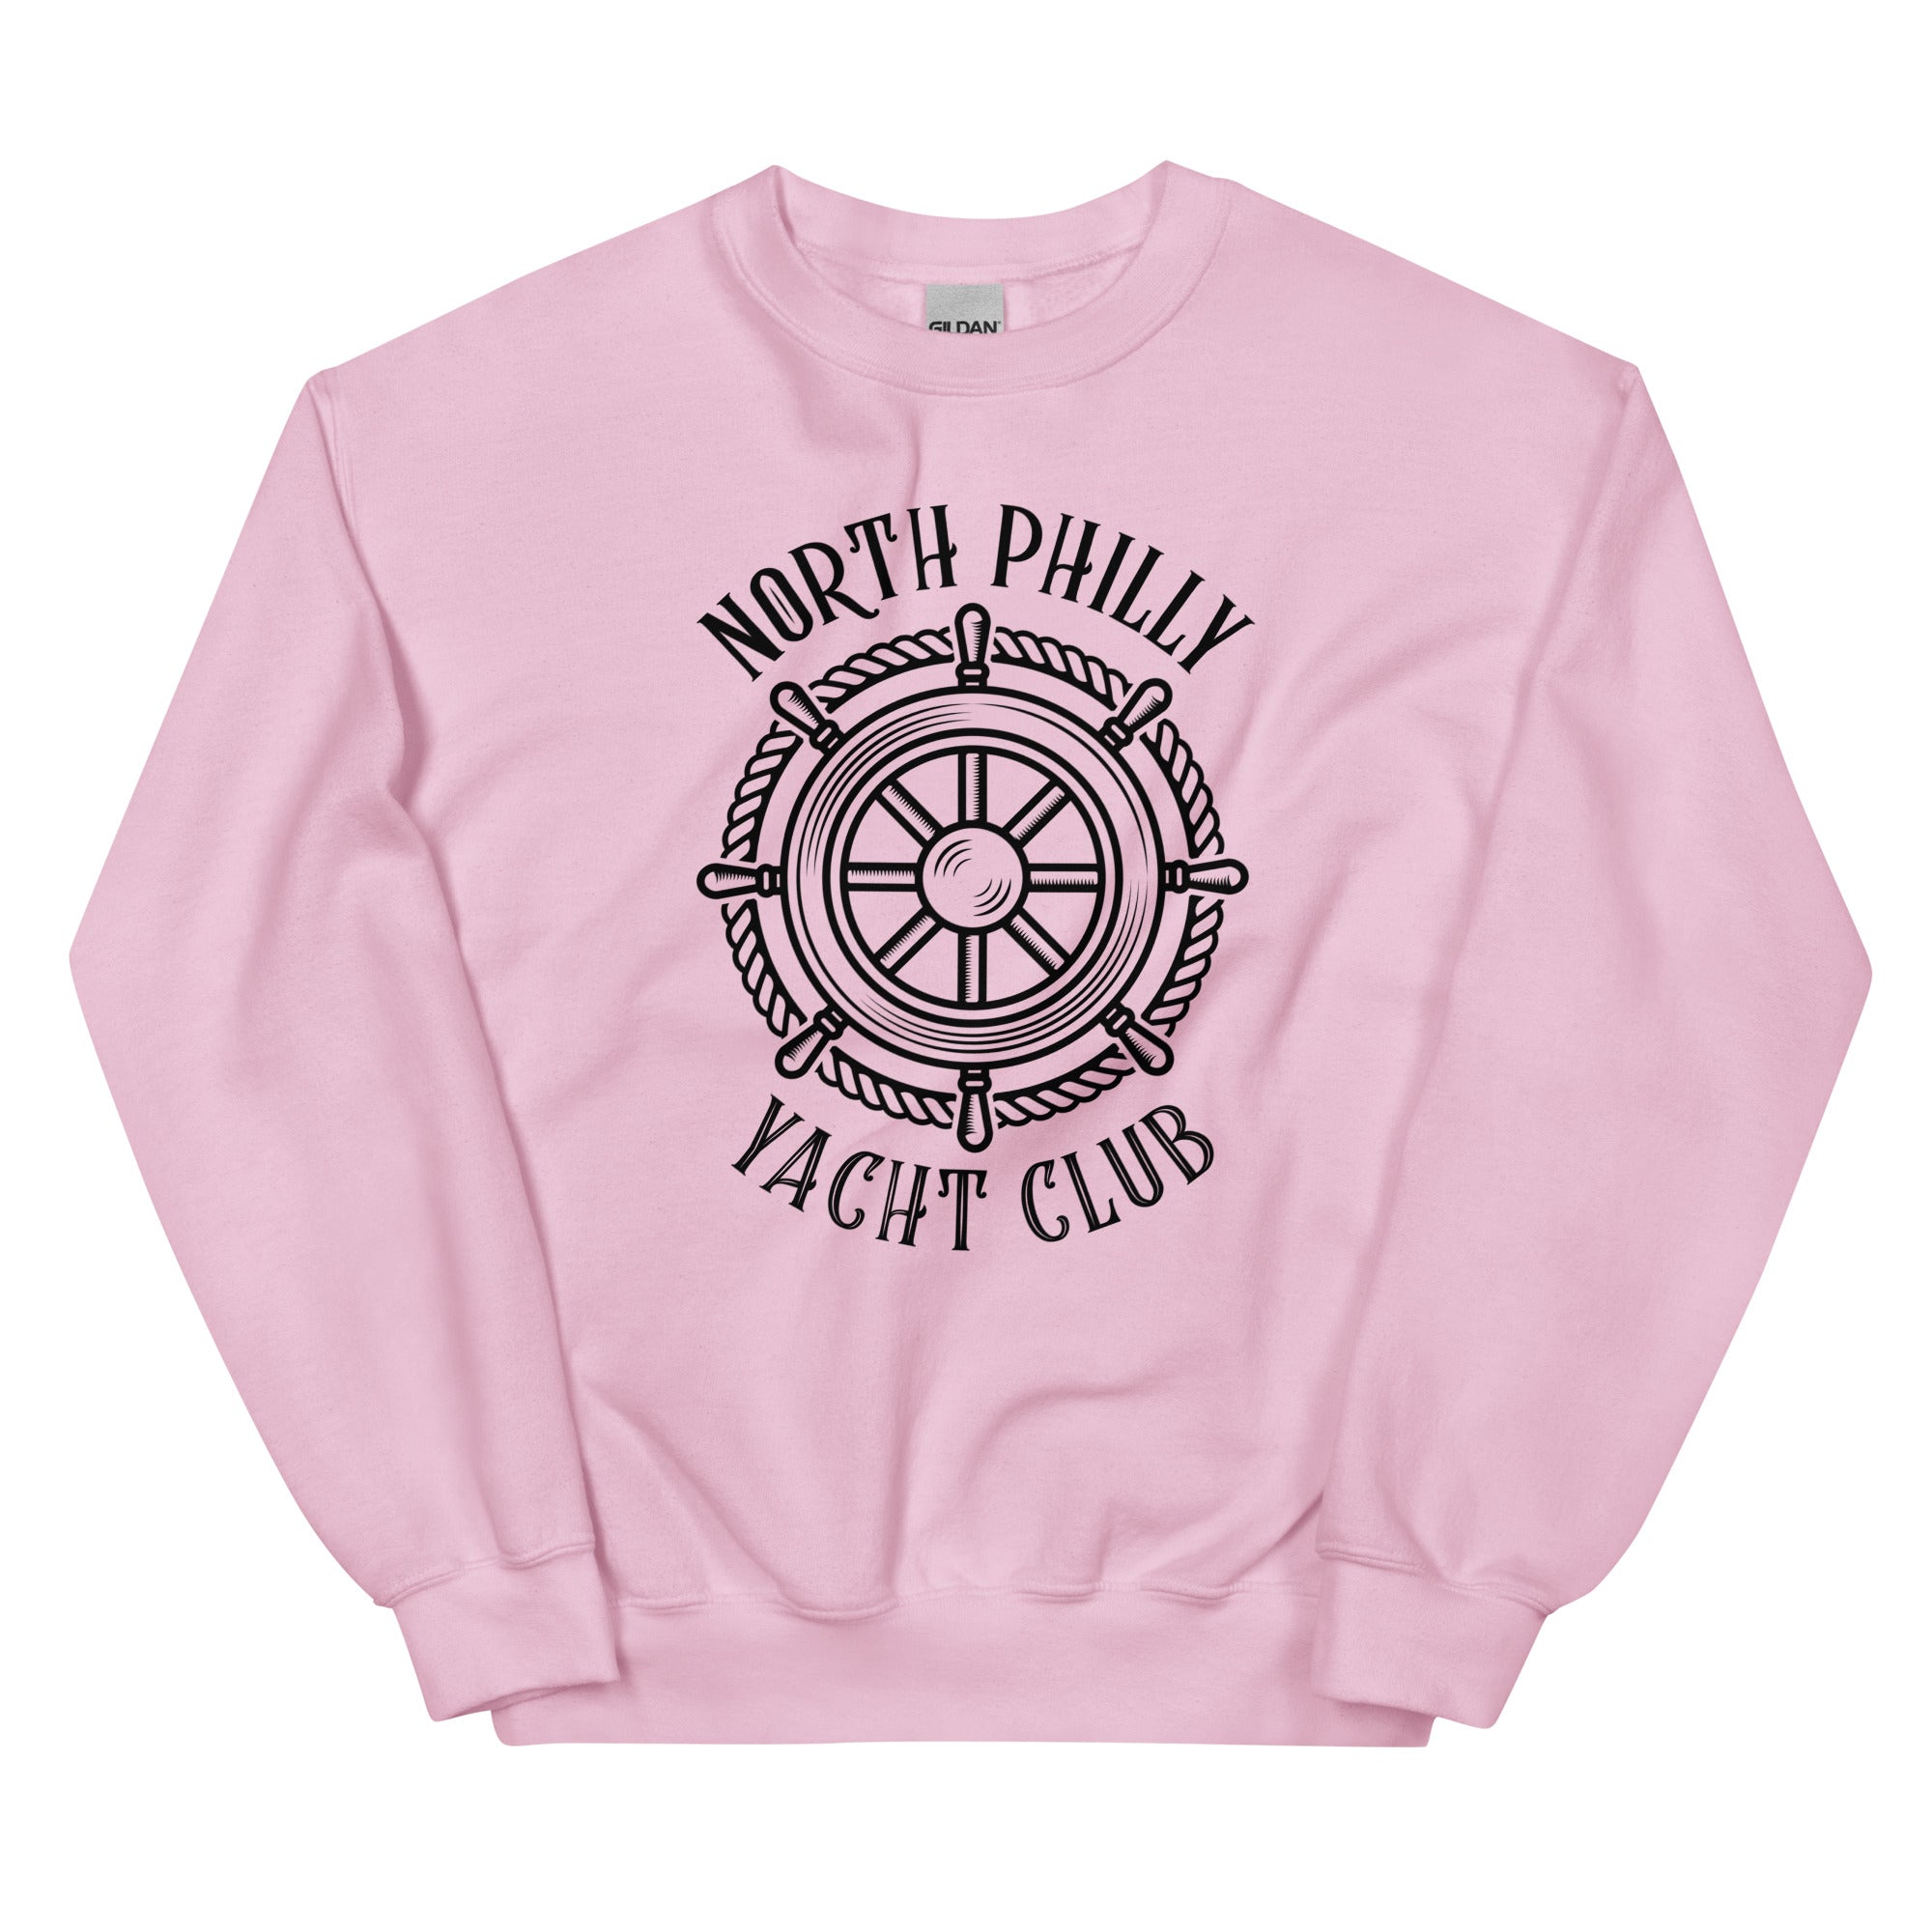 North Philly Philadelphia yacht club pink sweatshirt Phillygoat